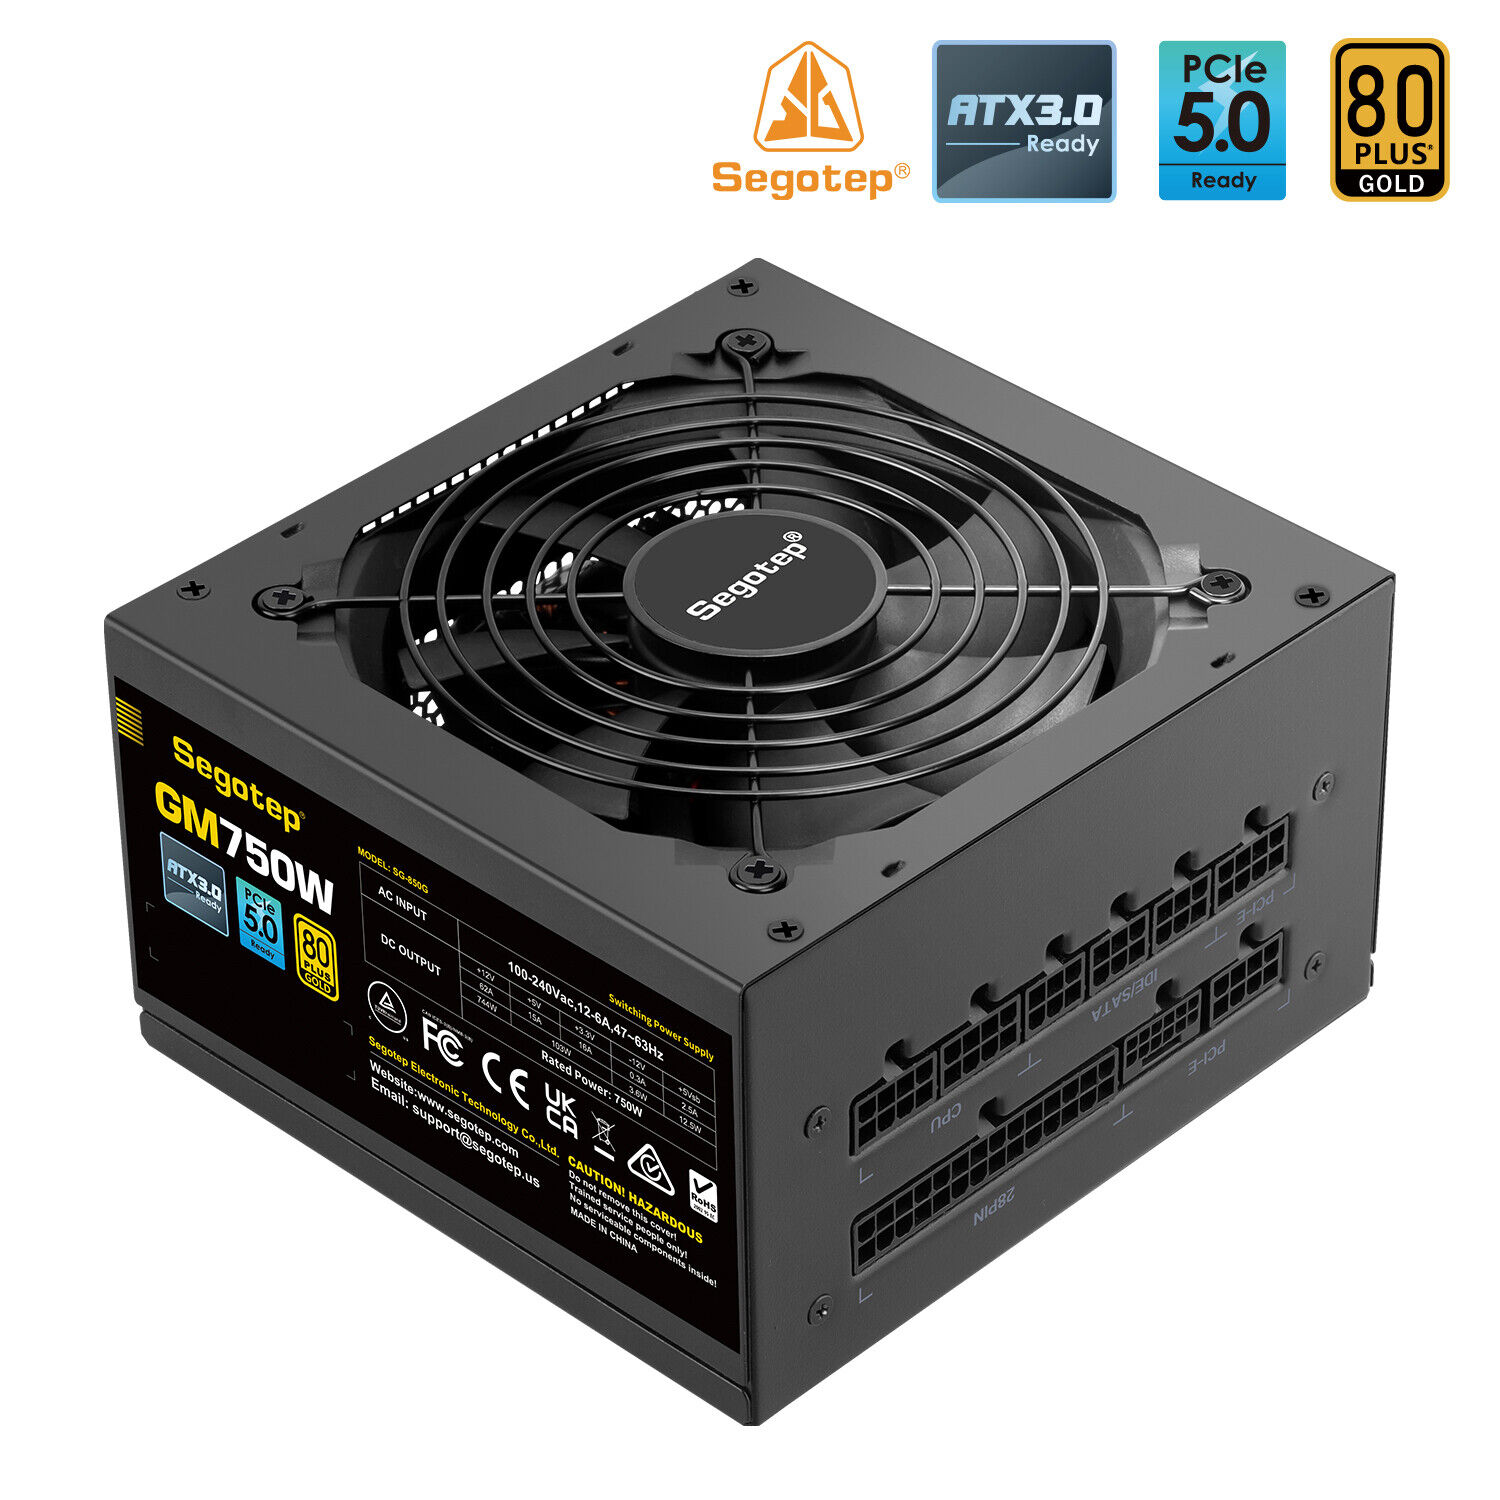 Segotep 750W ATX Fully Modular PC Gaming Power Supply 80+ Gold Certified PSU